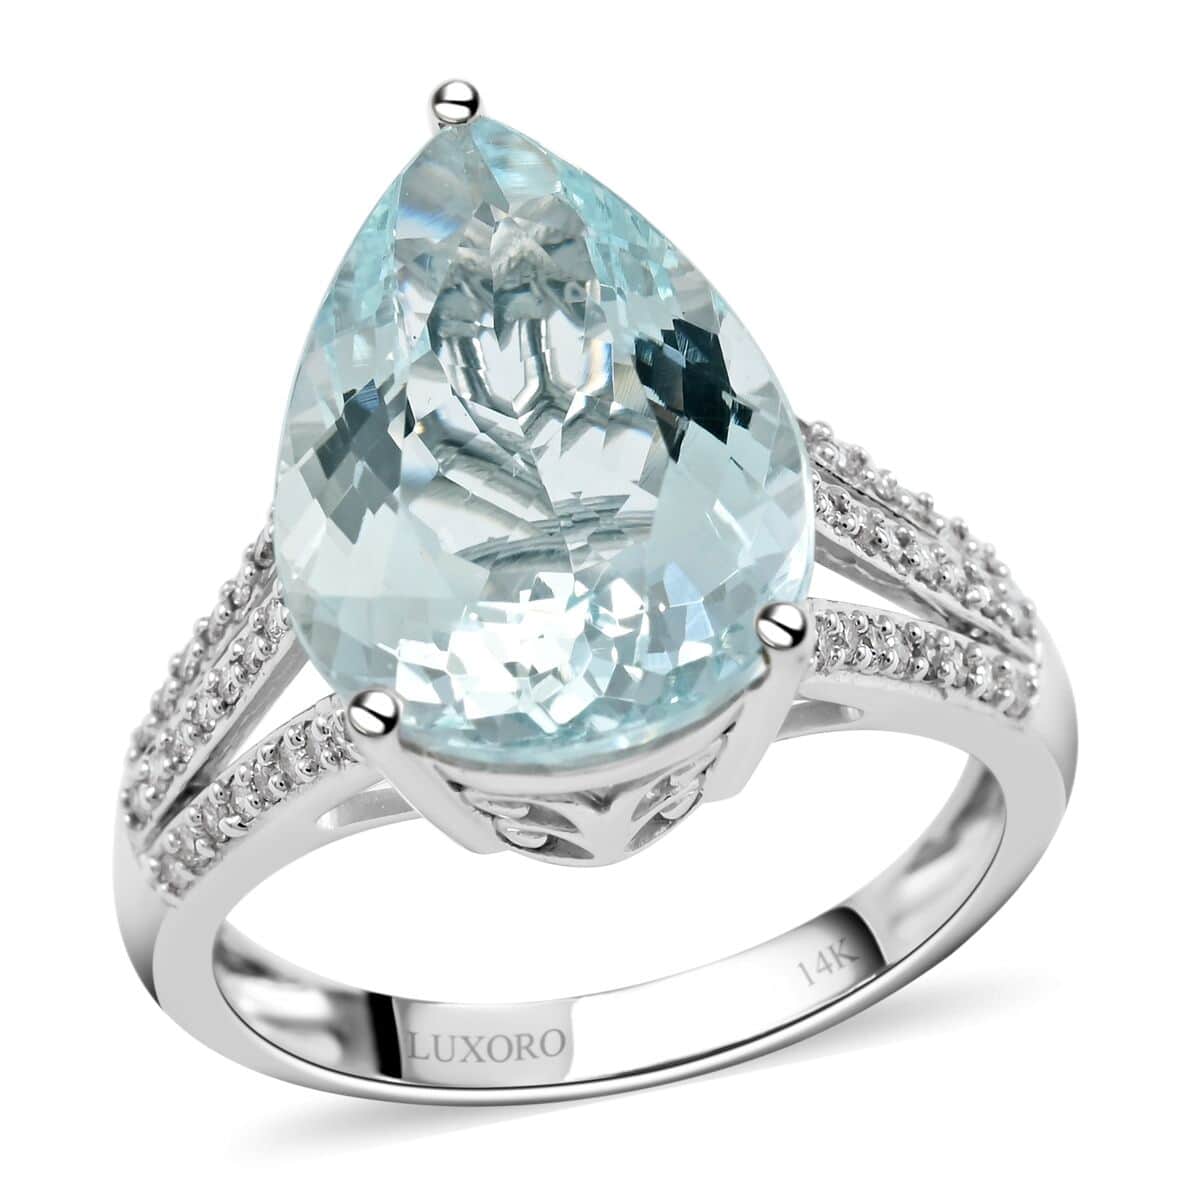 Luxoro 14K White Gold Premium Mangoro Aquamarine and G-H I2 Diamond Ring (Size 10.0) 4.50 ctw image number 0